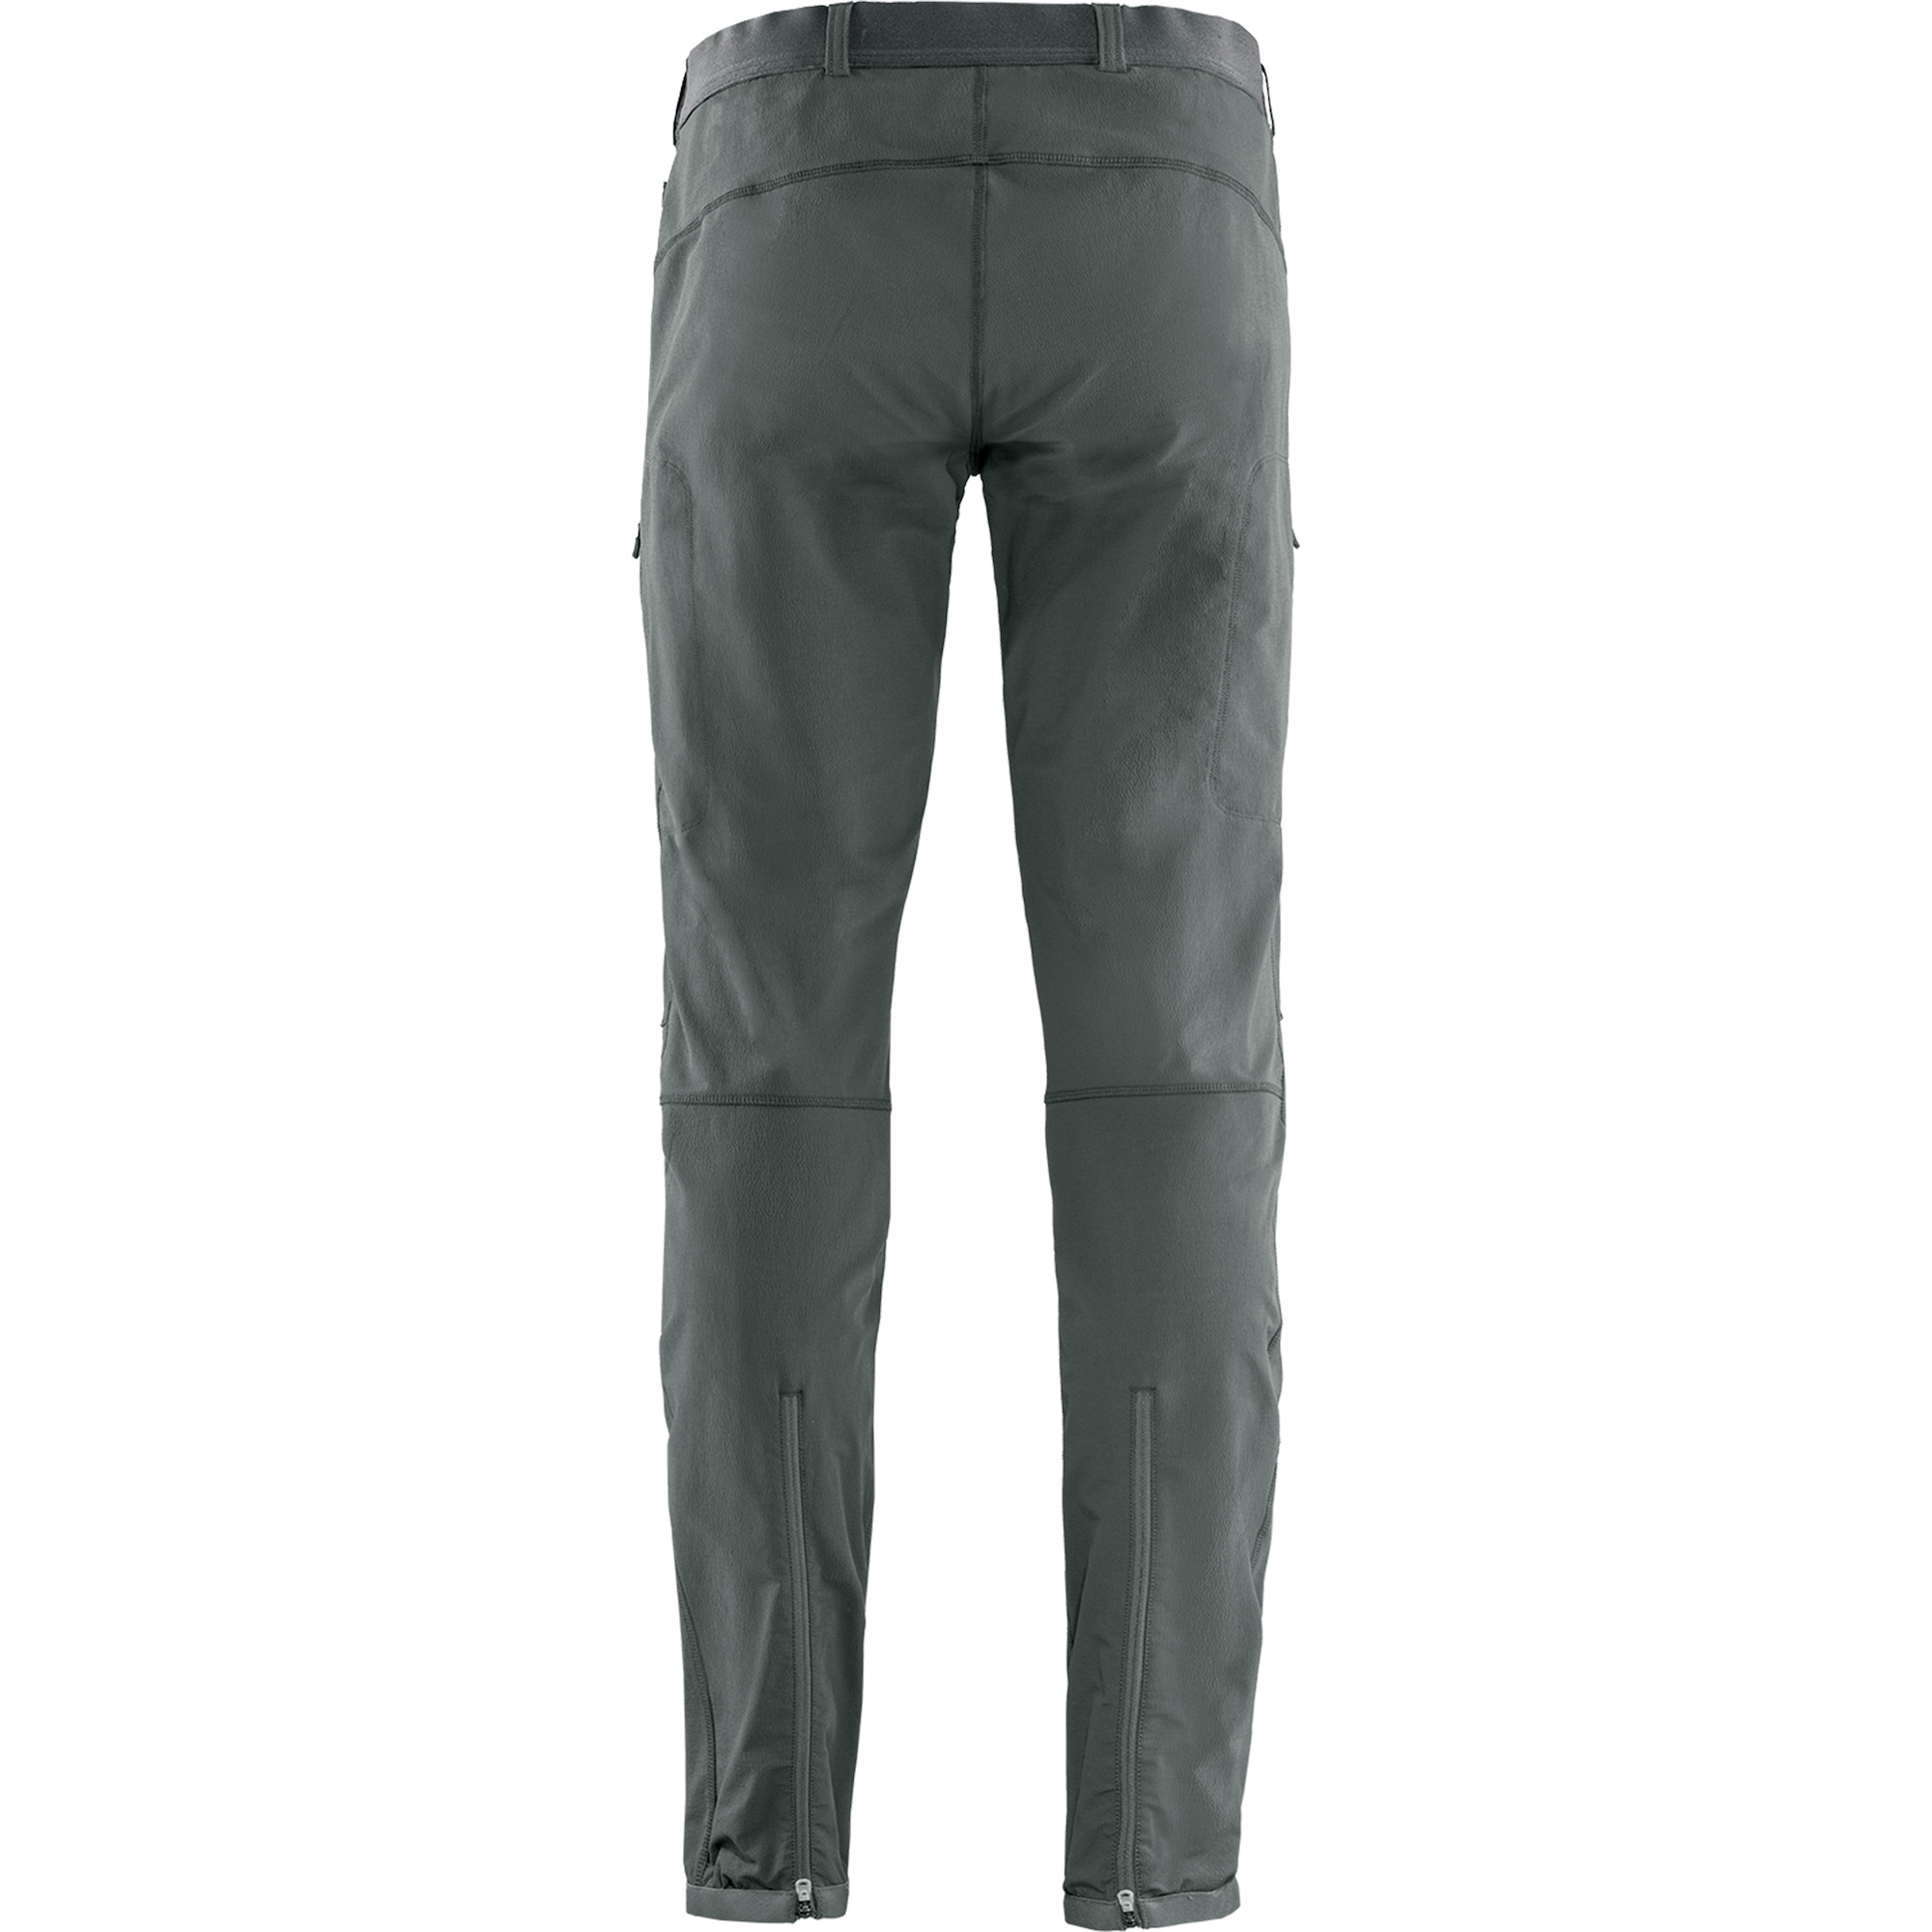 Navy Blue XL Desigual slacks discount 76% MEN FASHION Trousers Strech 